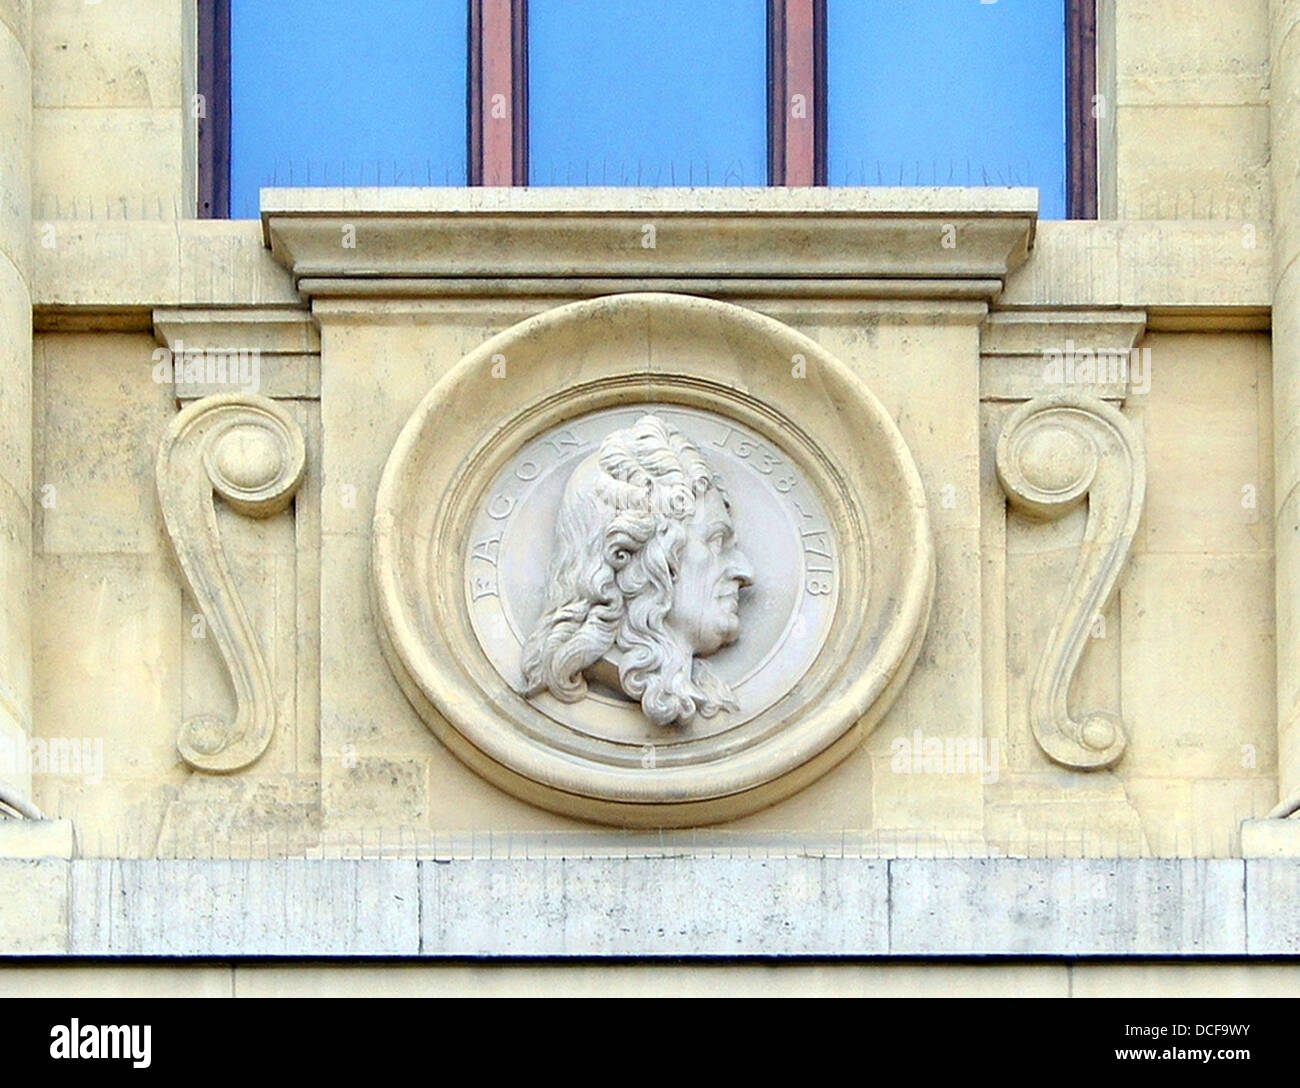 Guy-Crescent Fagon. Second mascaron (left) on the façade of the Grande Galerie de l'Evolution, Jardin des Plantes of Paris Stock Photo